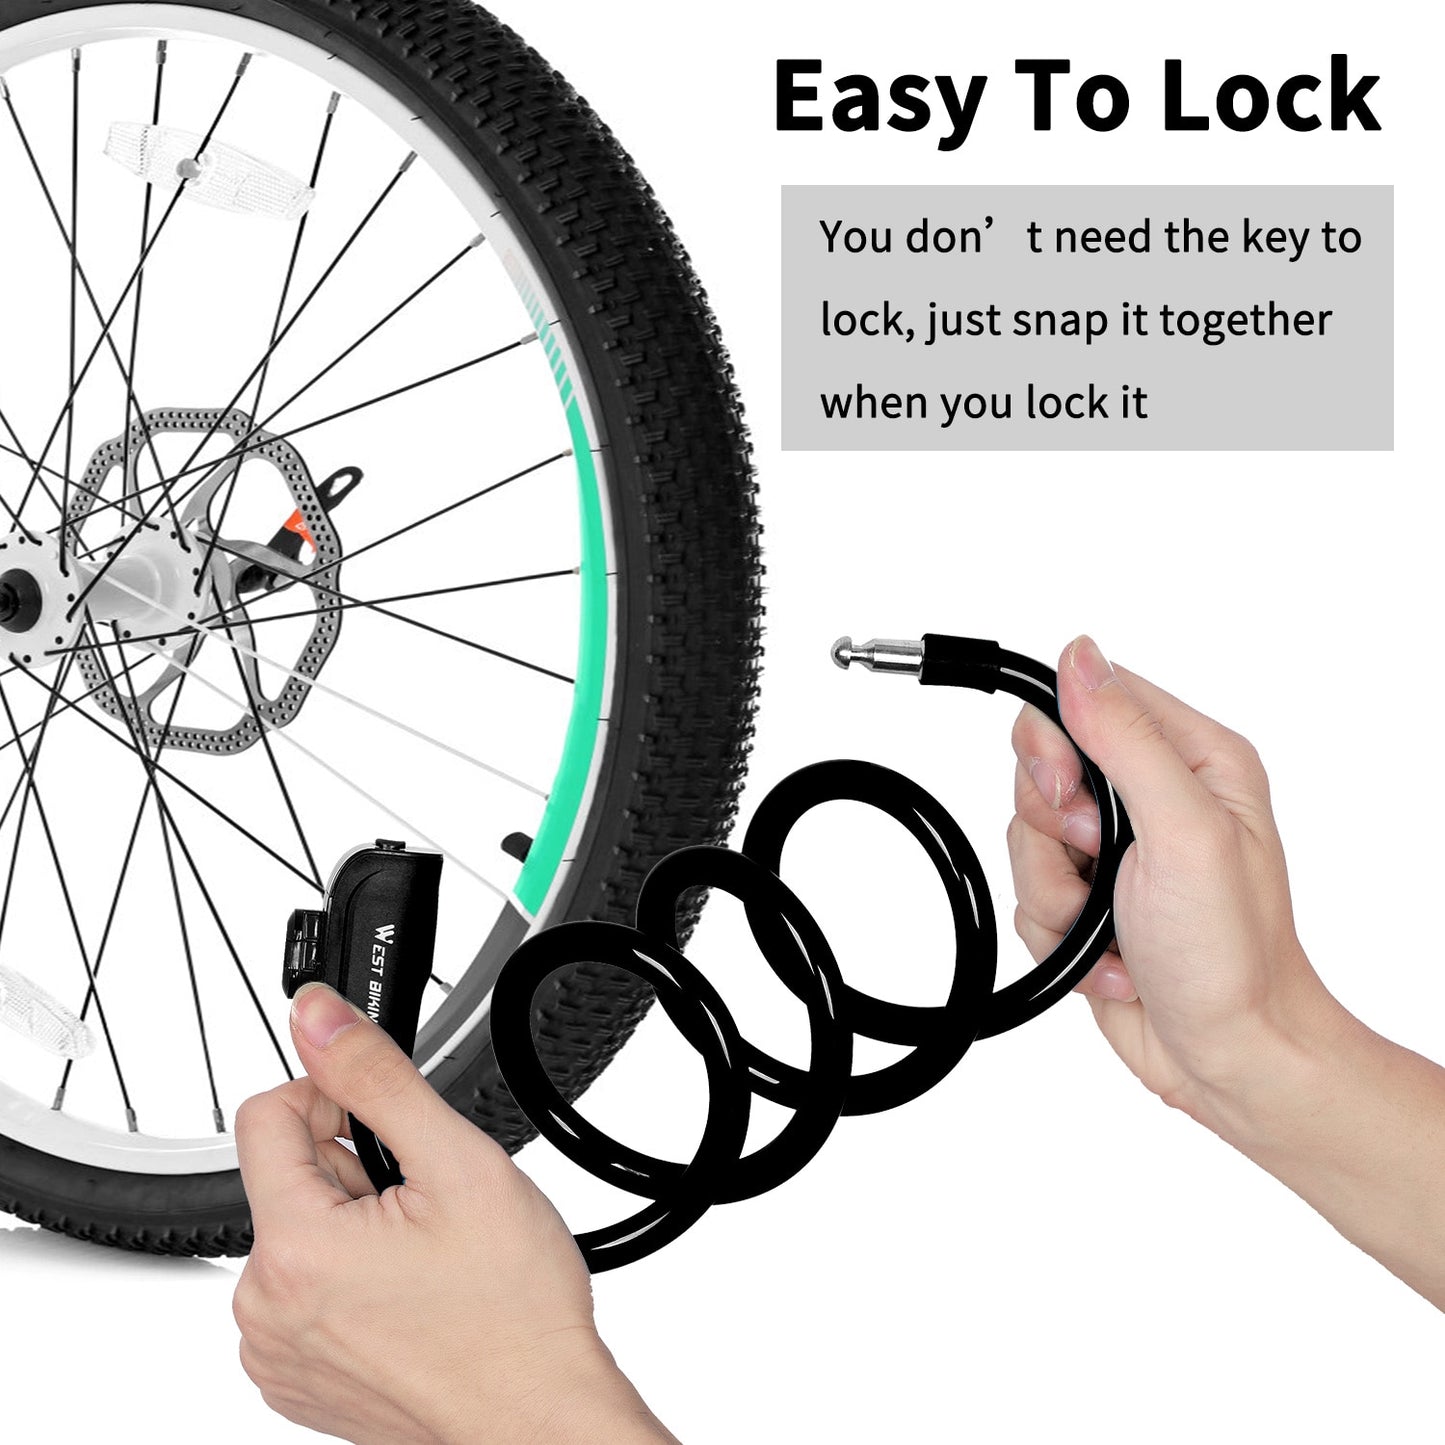 WEST BIKING Bike Cable Lock - Anti Theft - Key or Code - Bicycle Security Accessories - Vlad's Bike Bits